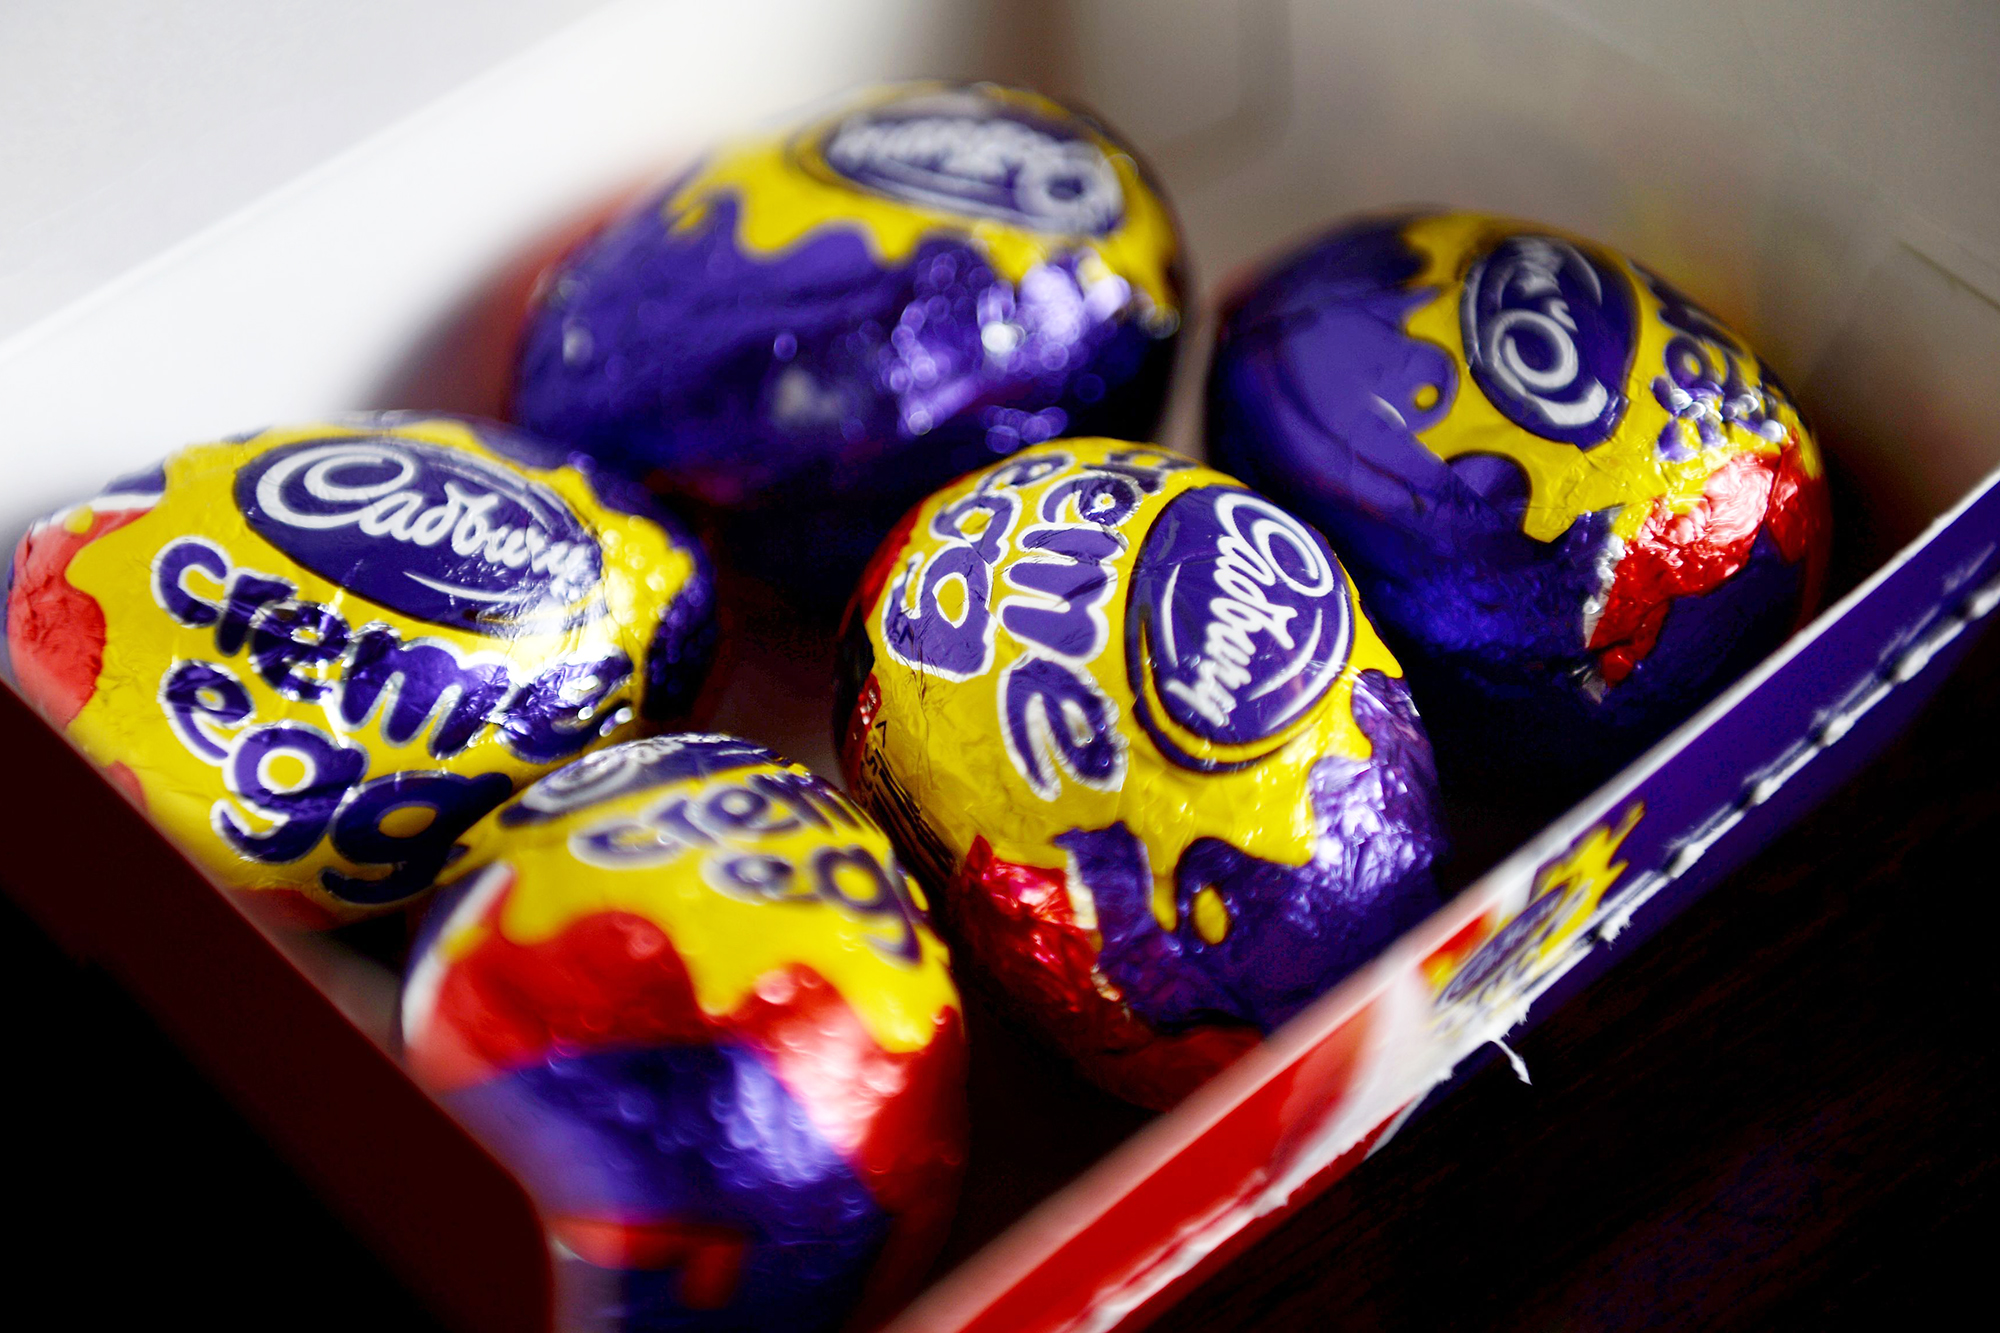 Cadbury defends Creme Eggs recipe change